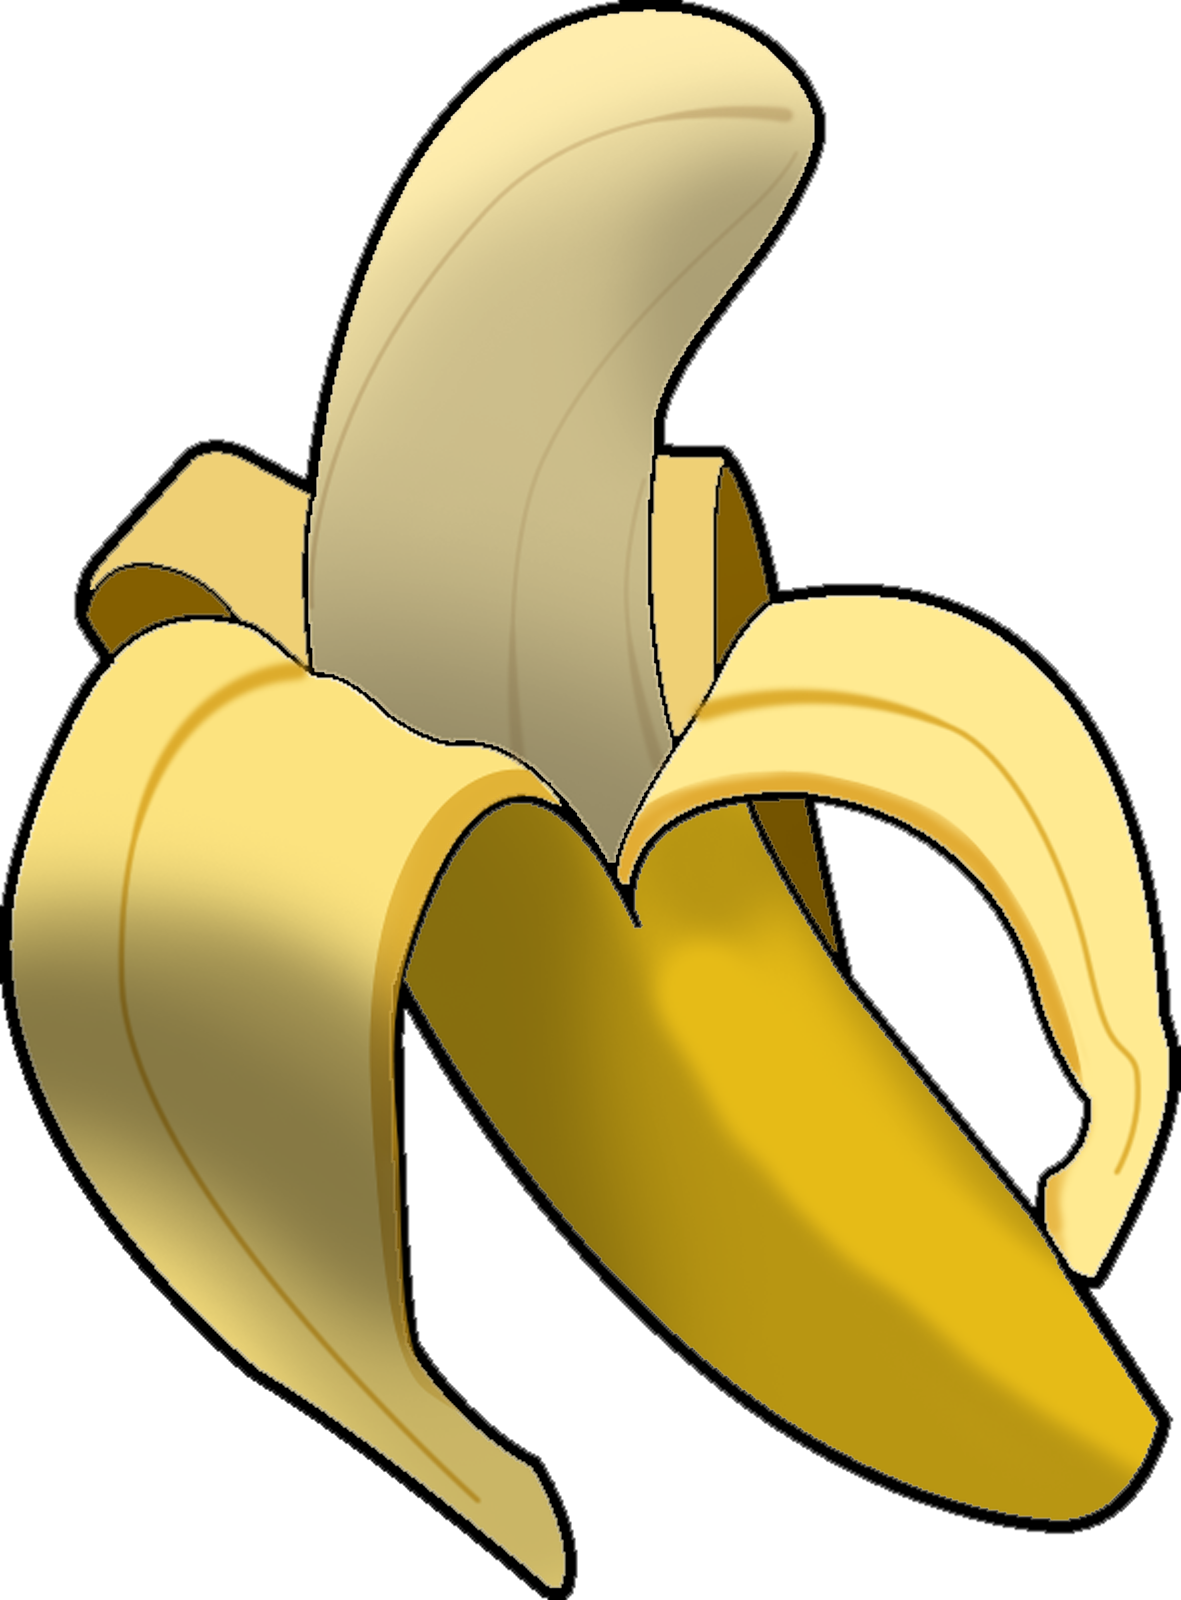 Banana toon